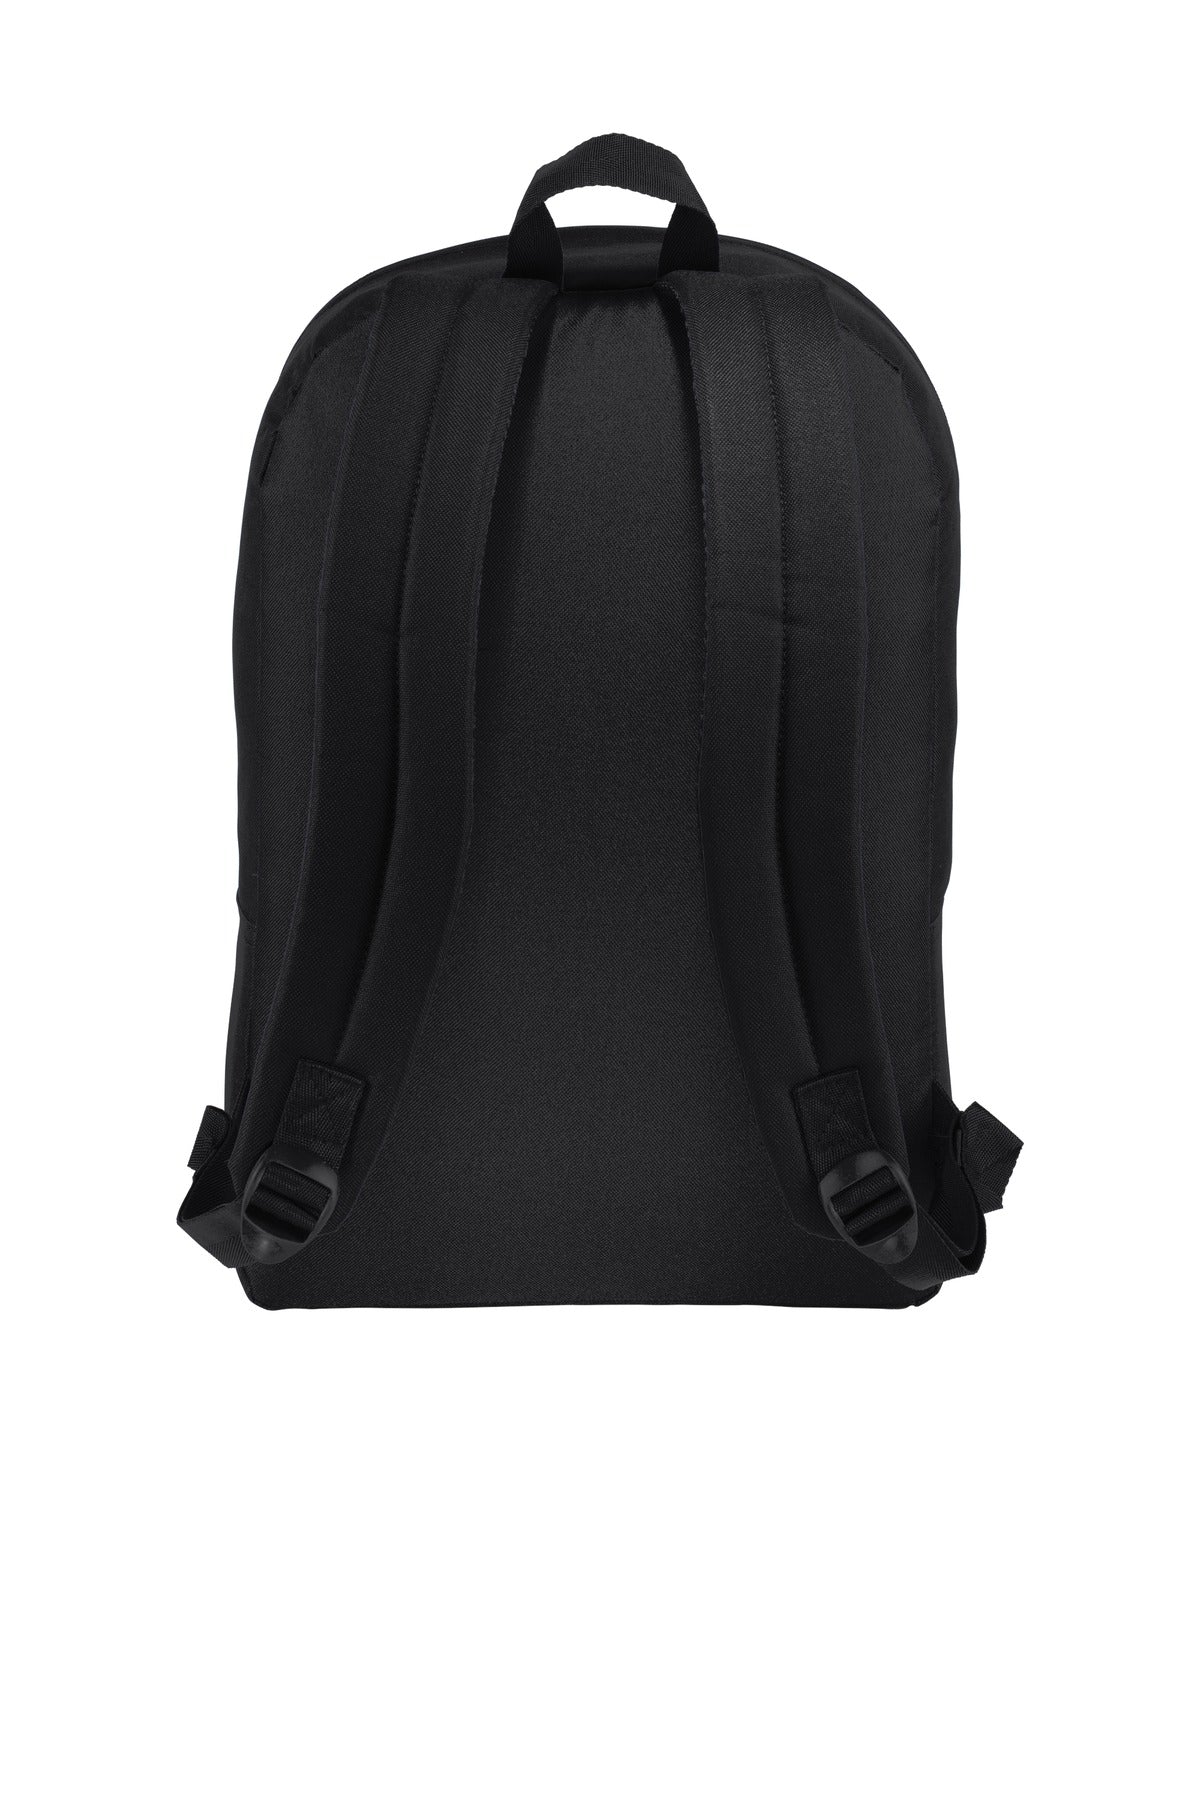 Port Authority ® Retro Backpack BG7150 - DFW Impression